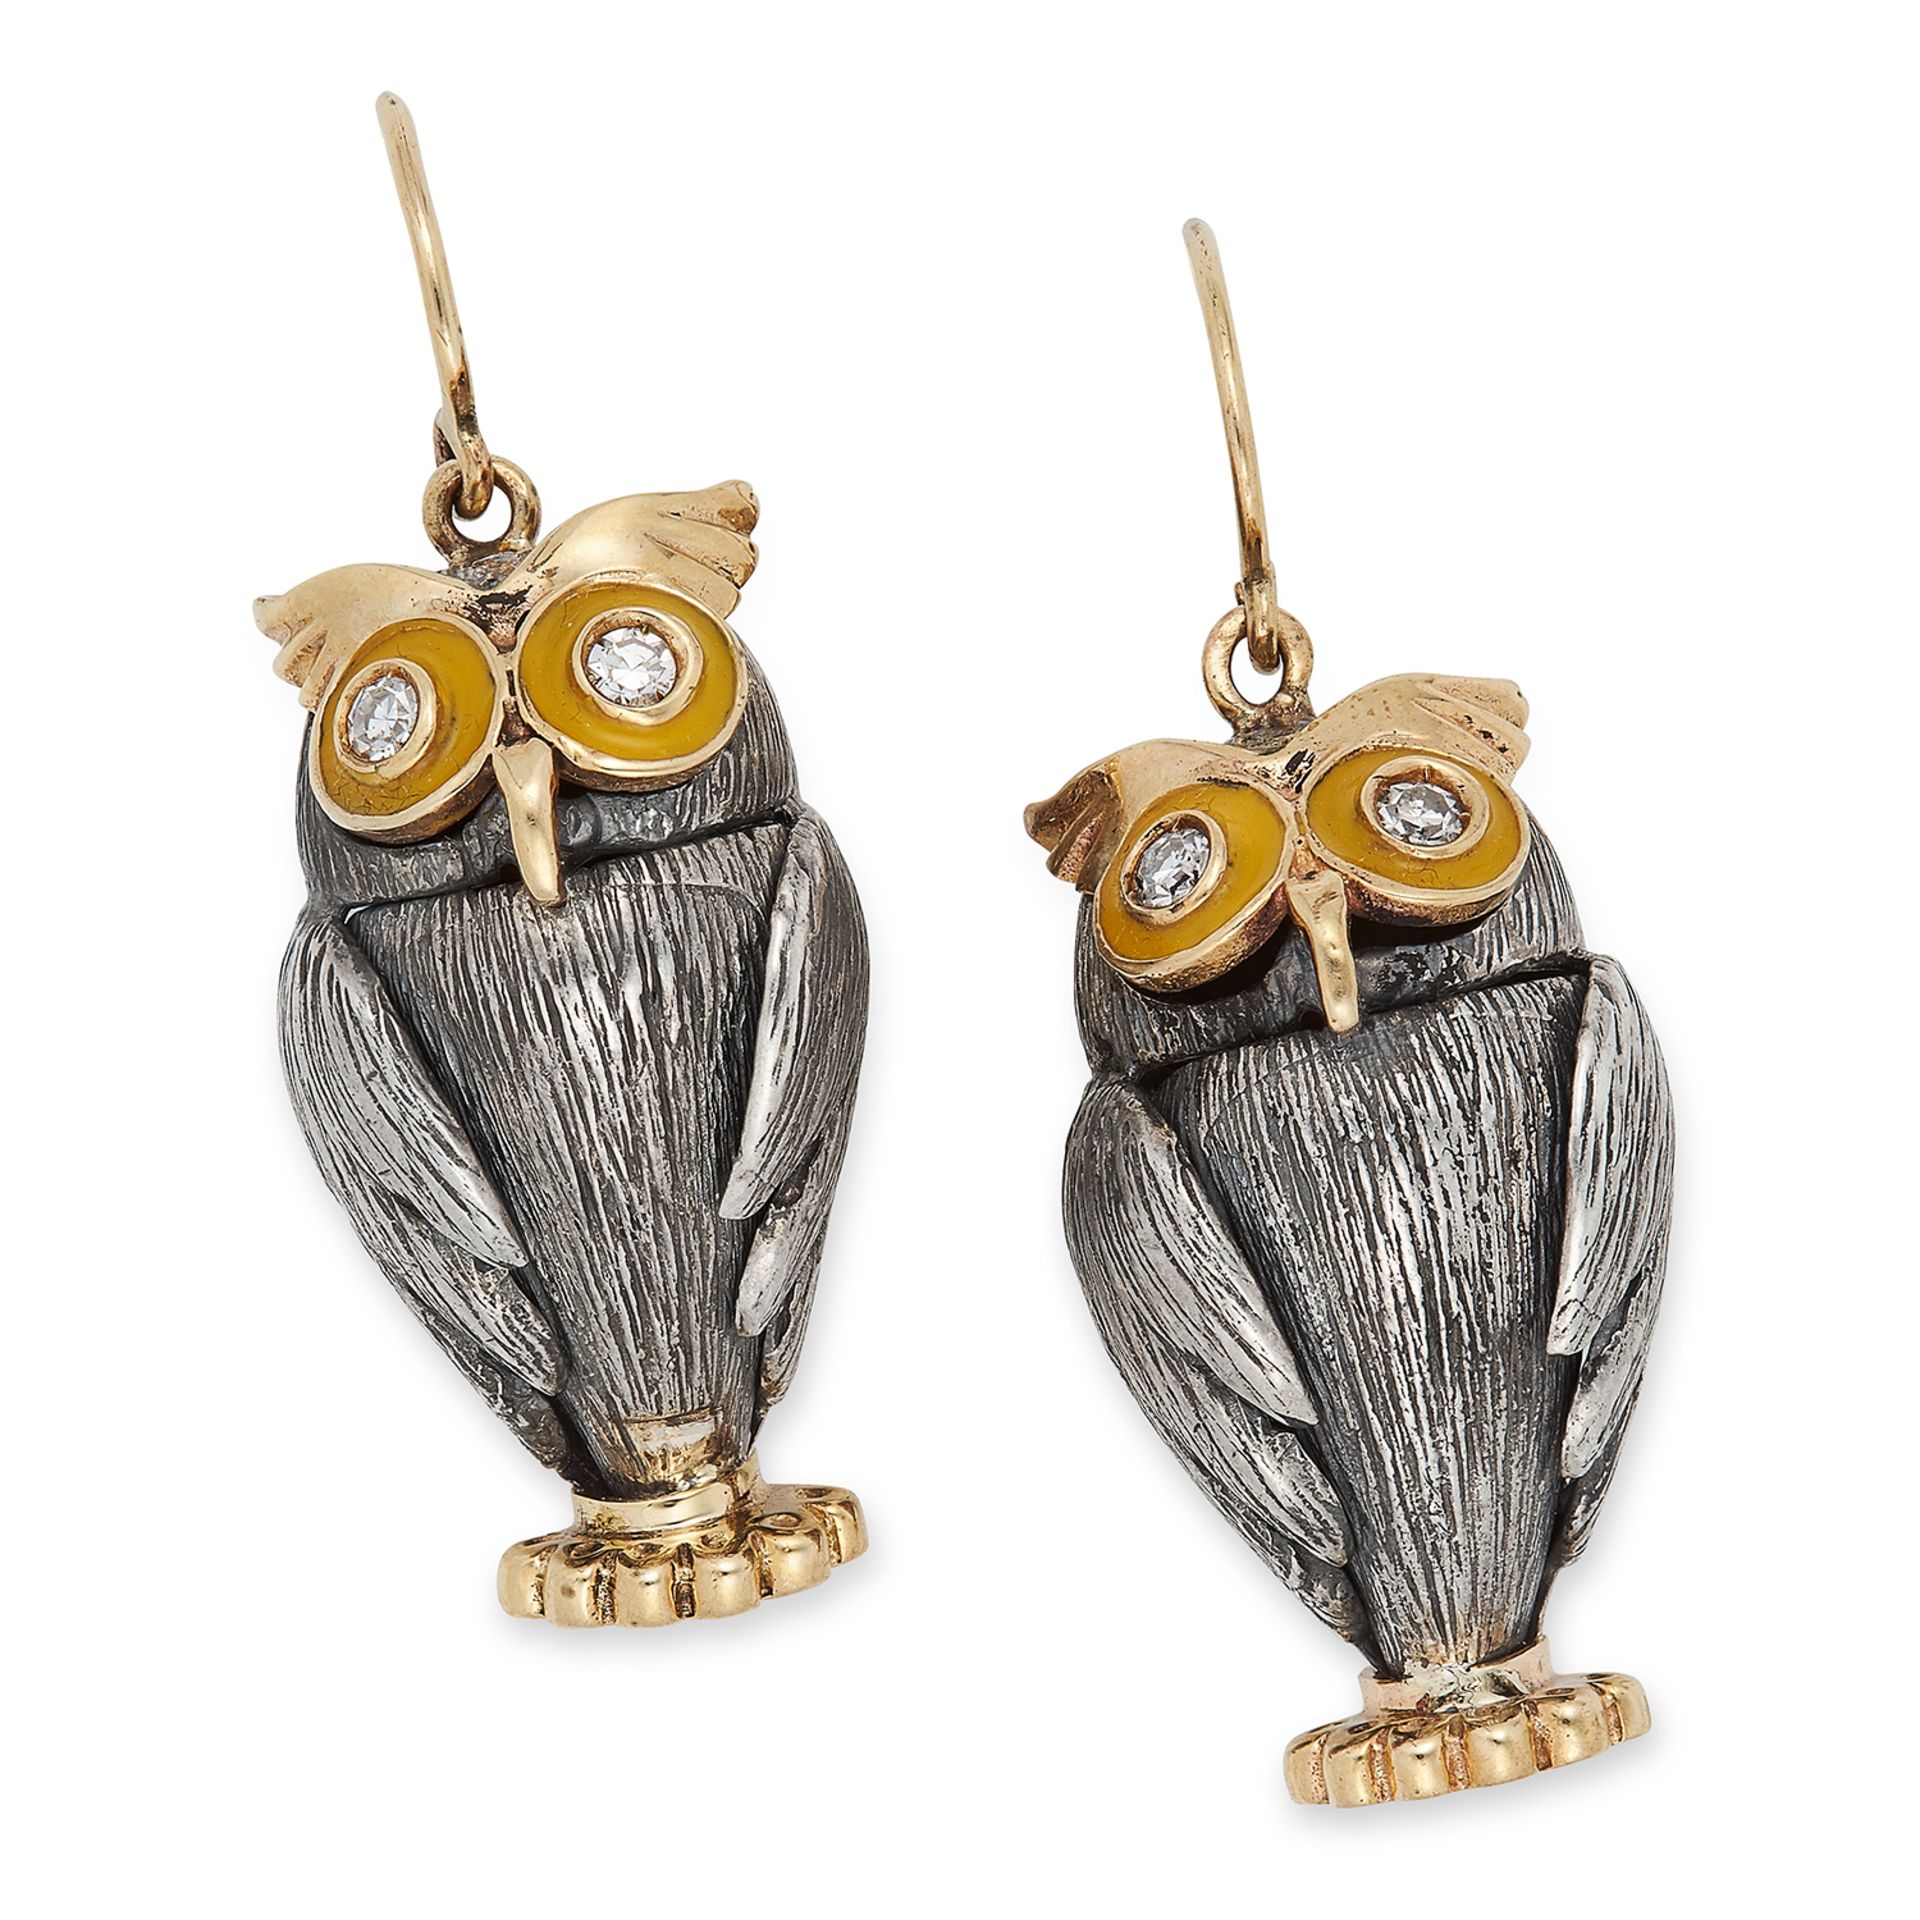 DIAMOND AND ENAMEL OWL EARRINGS set with round cut diamonds and yellow enamel, 3.9cm, 12g.